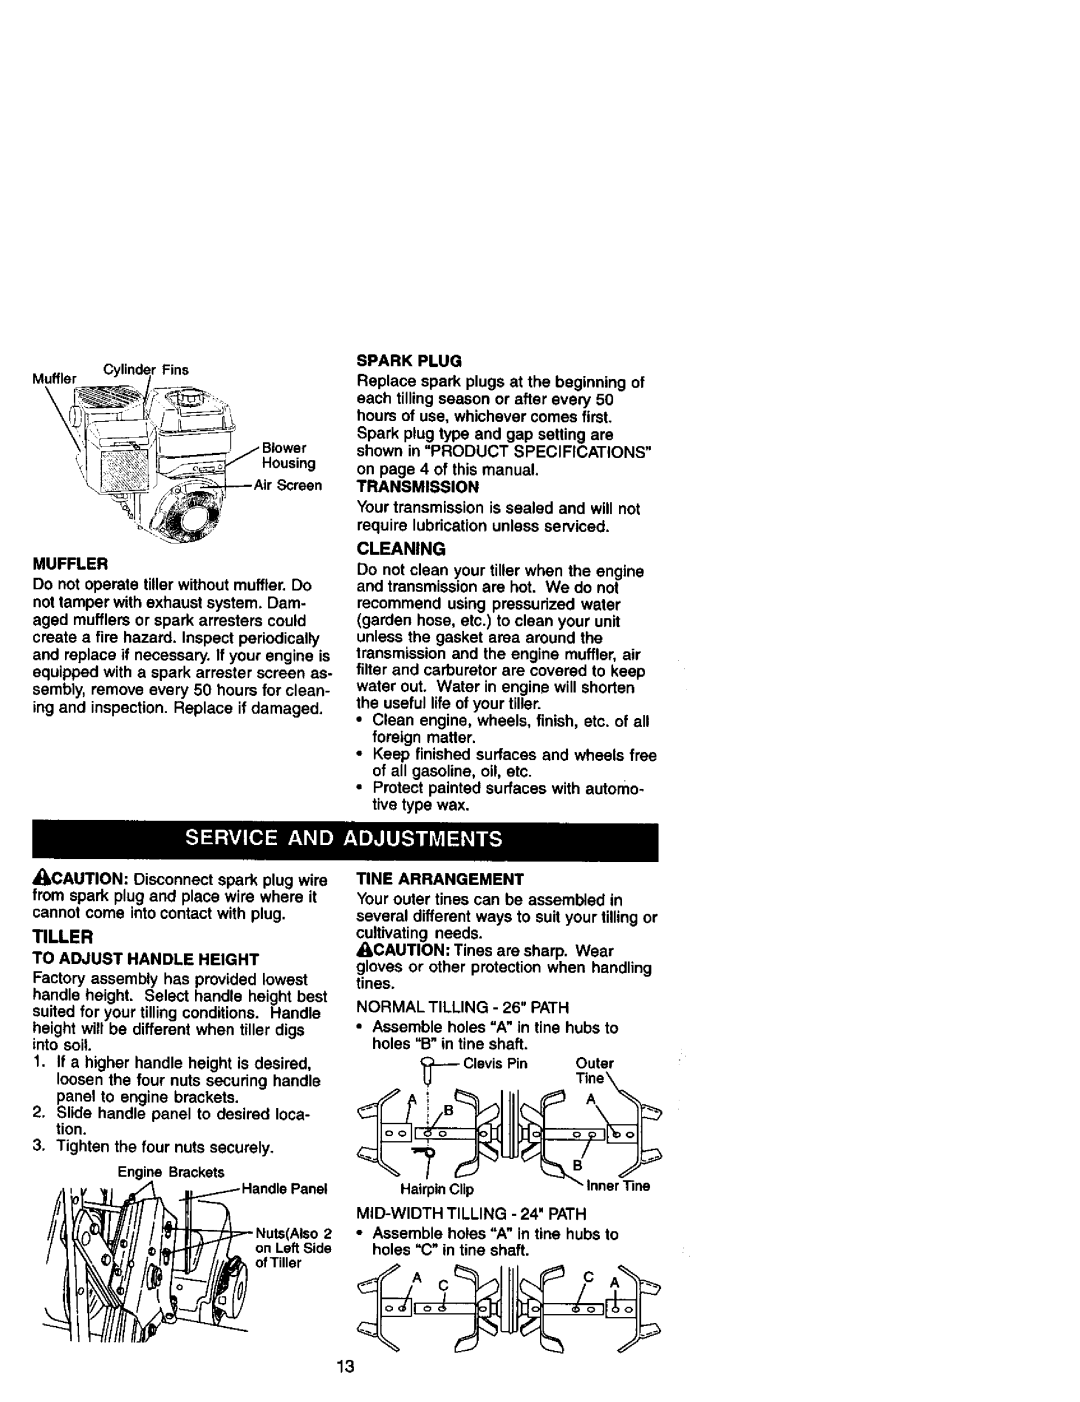 Craftsman 917.29249 owner manual Spark Plug, Clevis Pin 